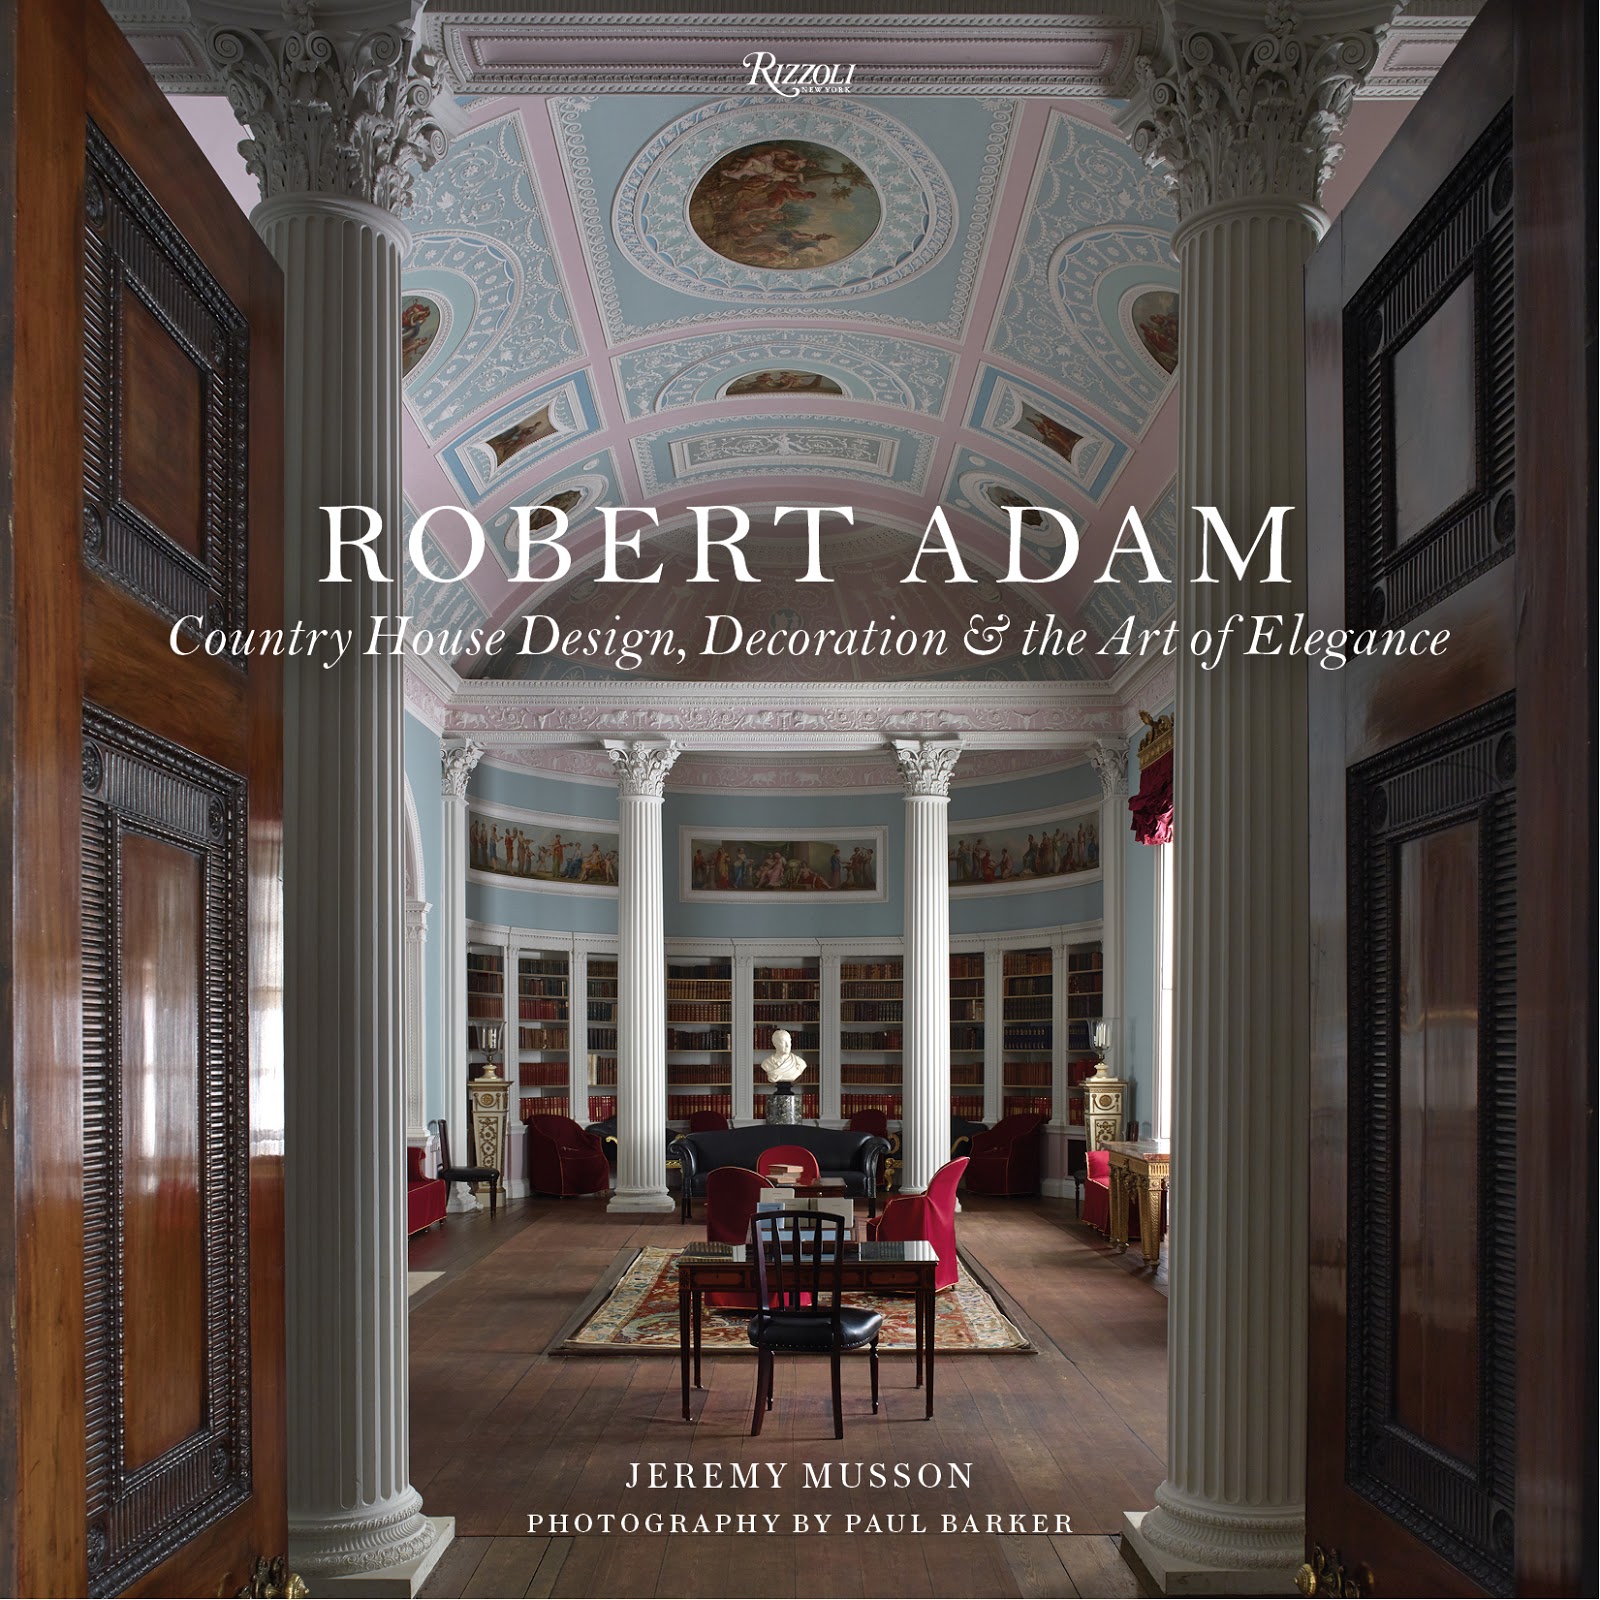 Architect Design™ Robert Adam New Book Release